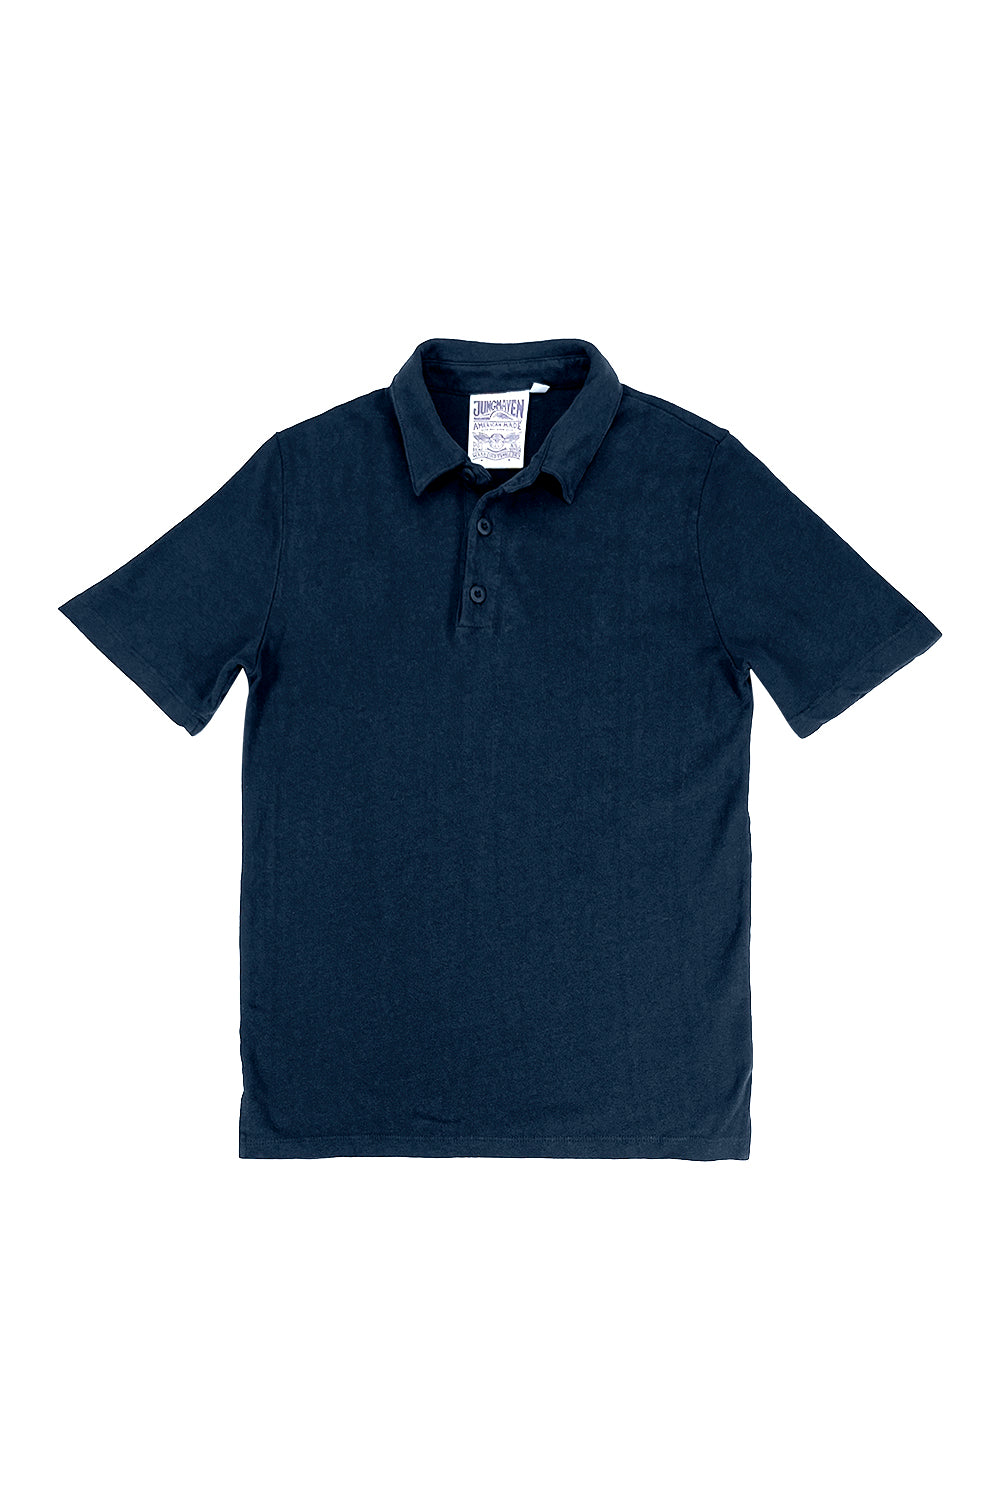 Preston Polo Shirt | Jungmaven Hemp Clothing & Accessories / Color: Navy